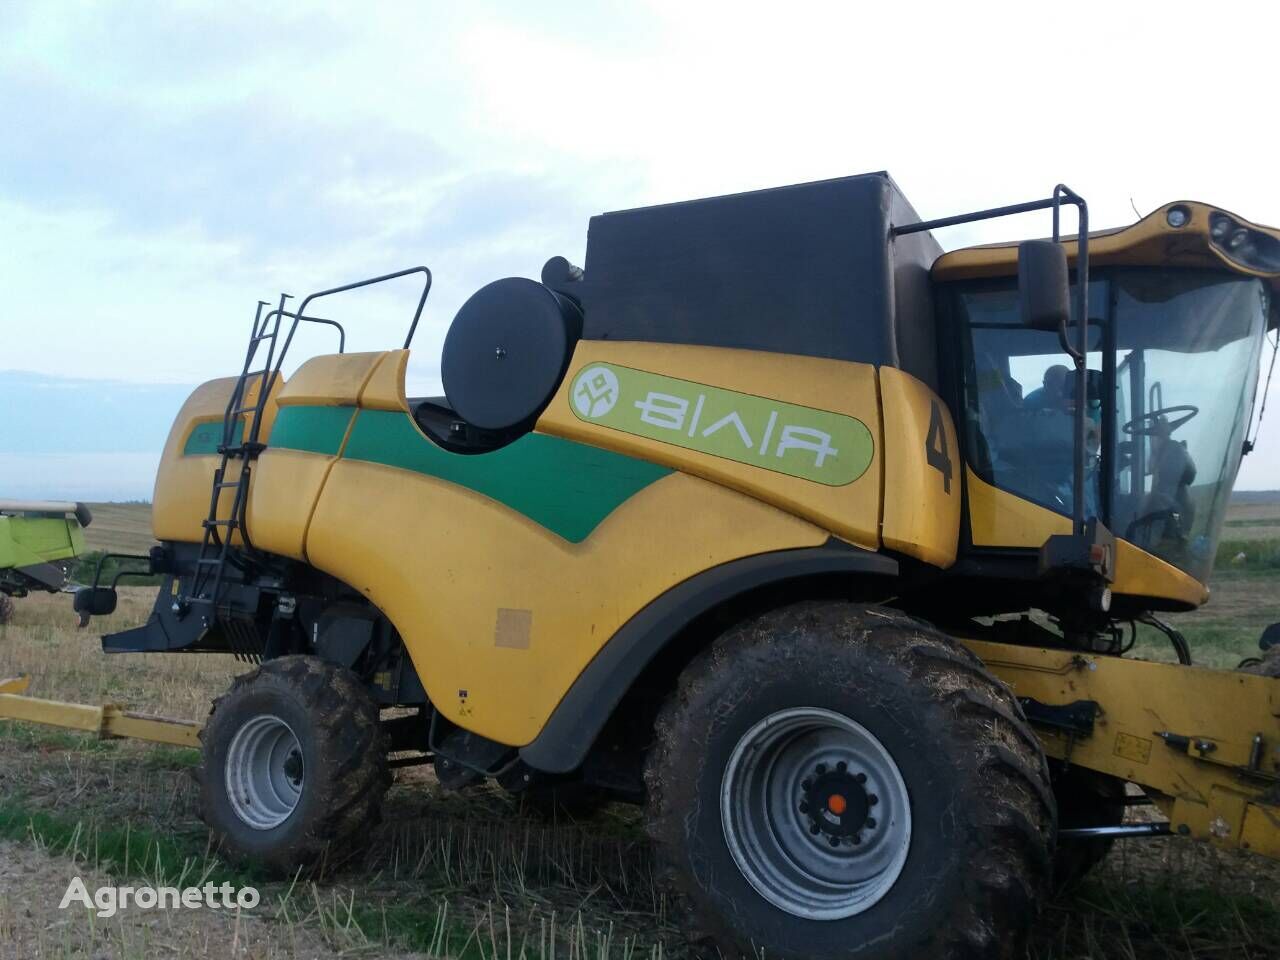 New Holland CX6090 grain harvester